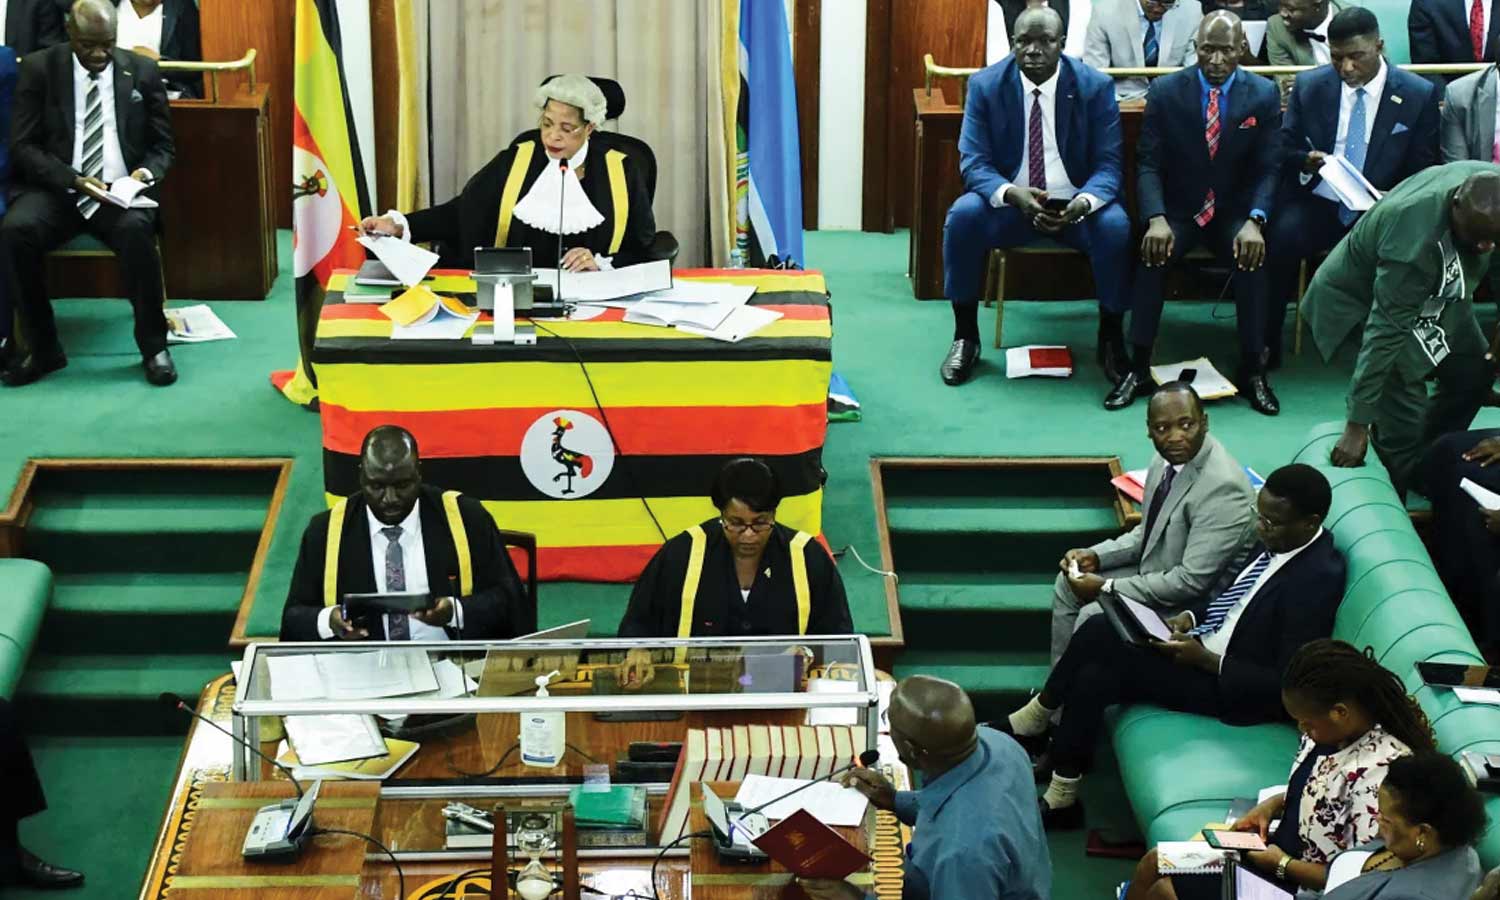 Hukuman penjara 10 tahun untuk homoseksual di Uganda – Parlemen mengesahkan undang-undang